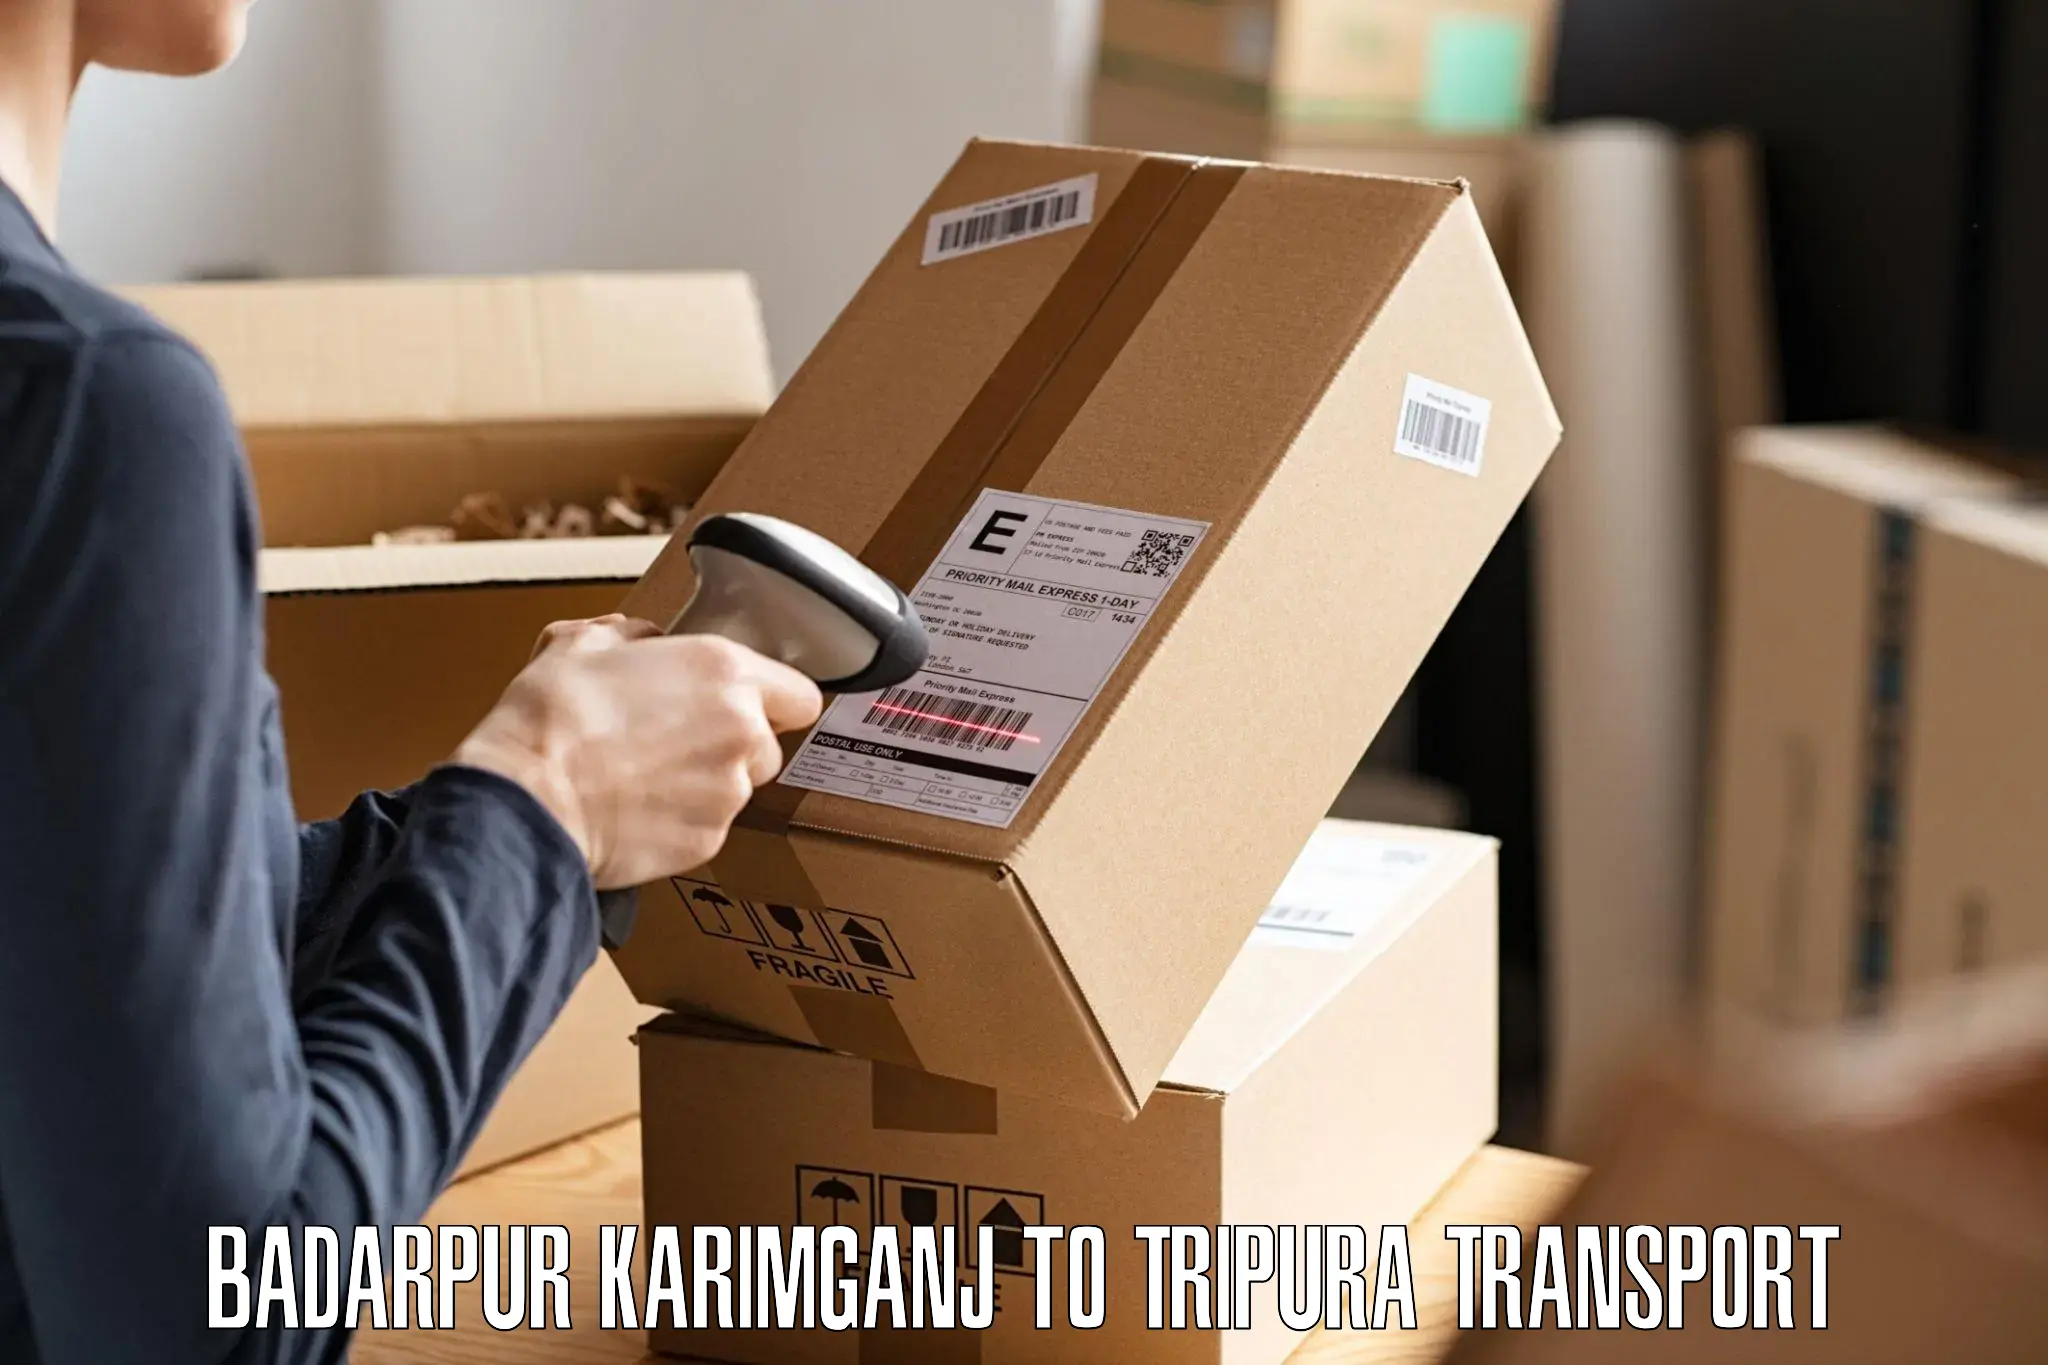 Vehicle parcel service Badarpur Karimganj to Agartala